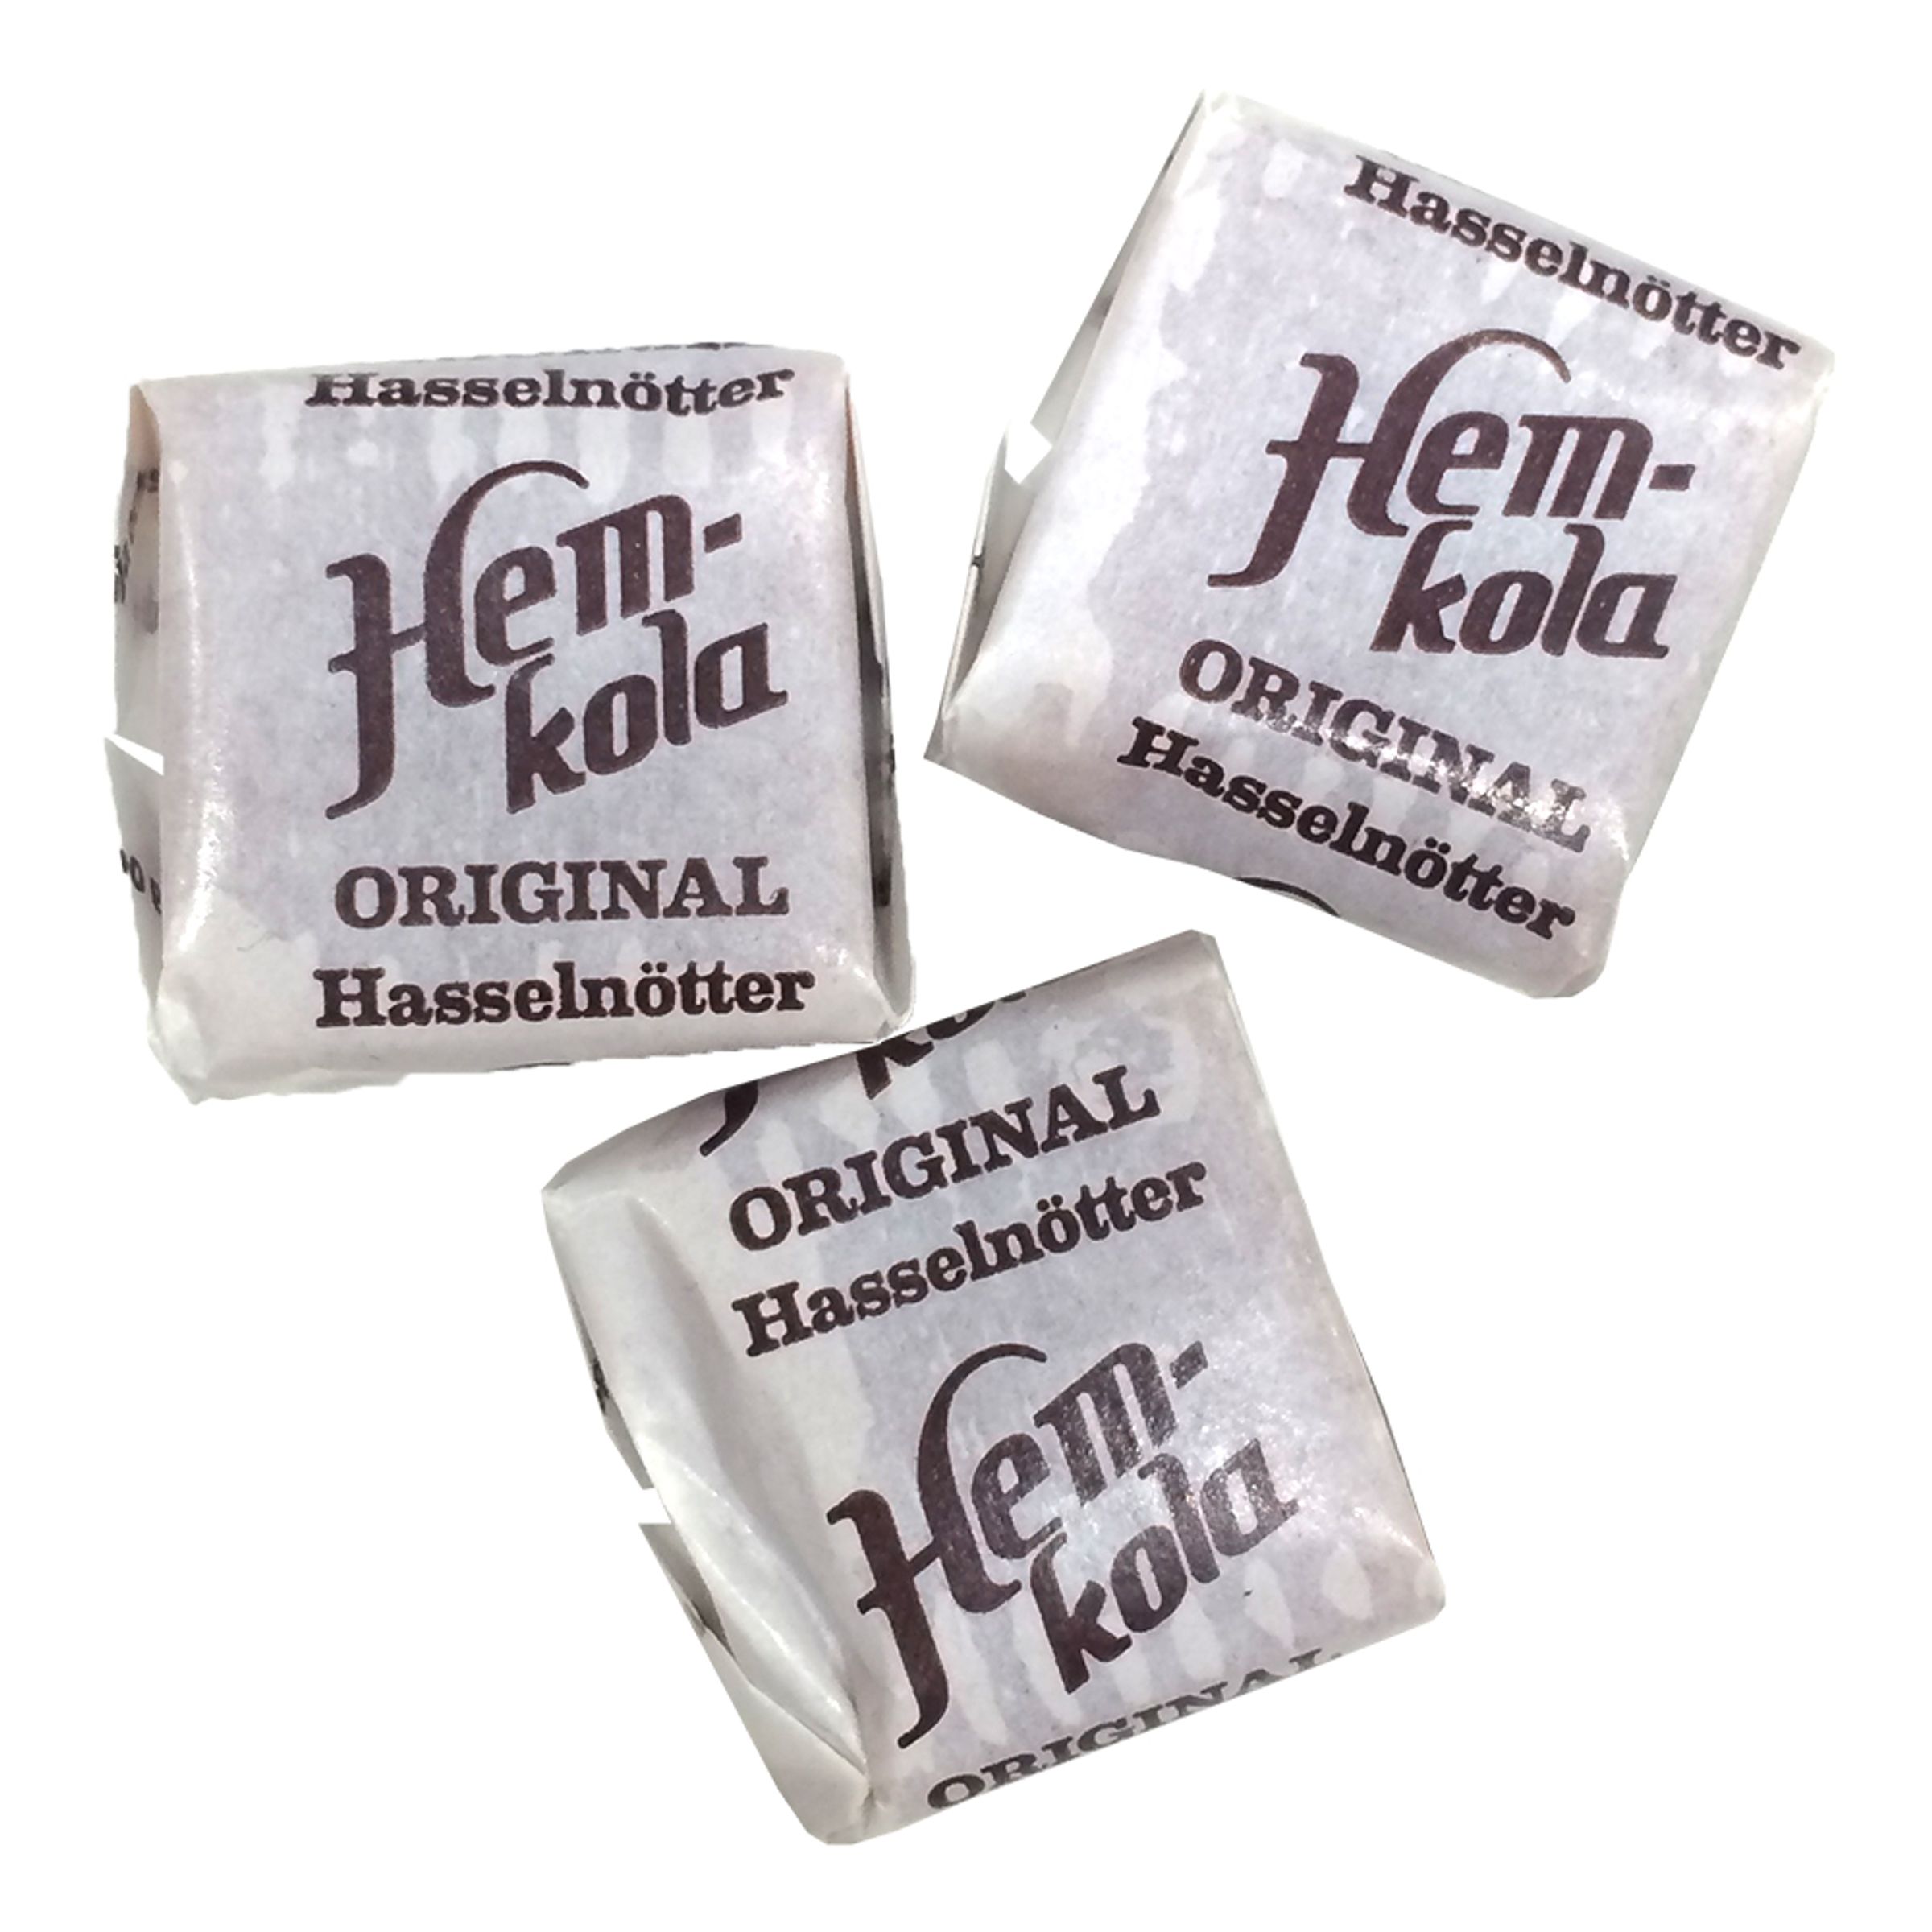 Hemkola Original